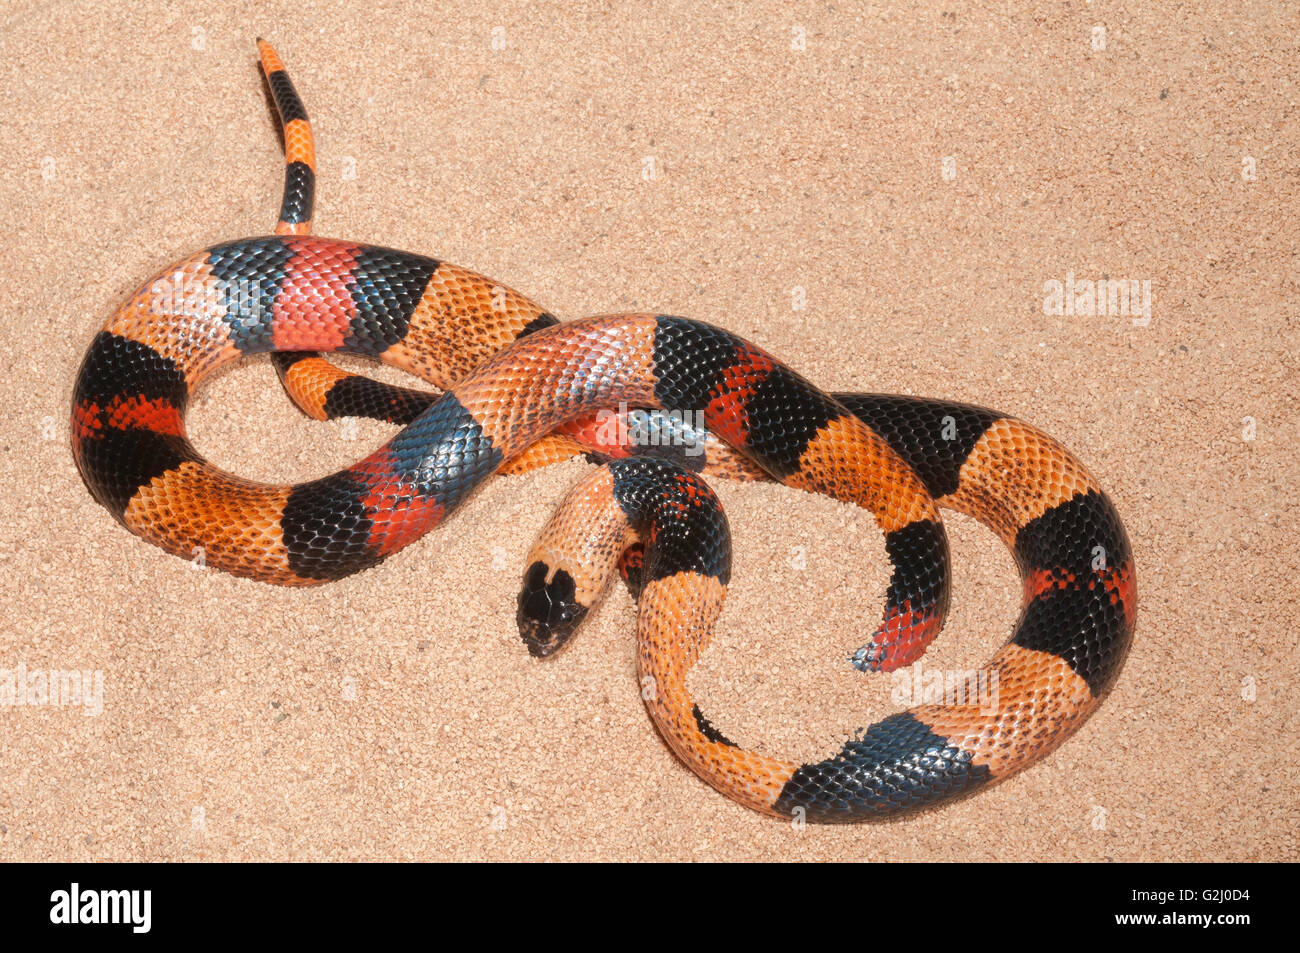 Pueblan milk snake, Lampropeltis triangulum campbelli, orange phase; native to Mexico Stock Photo